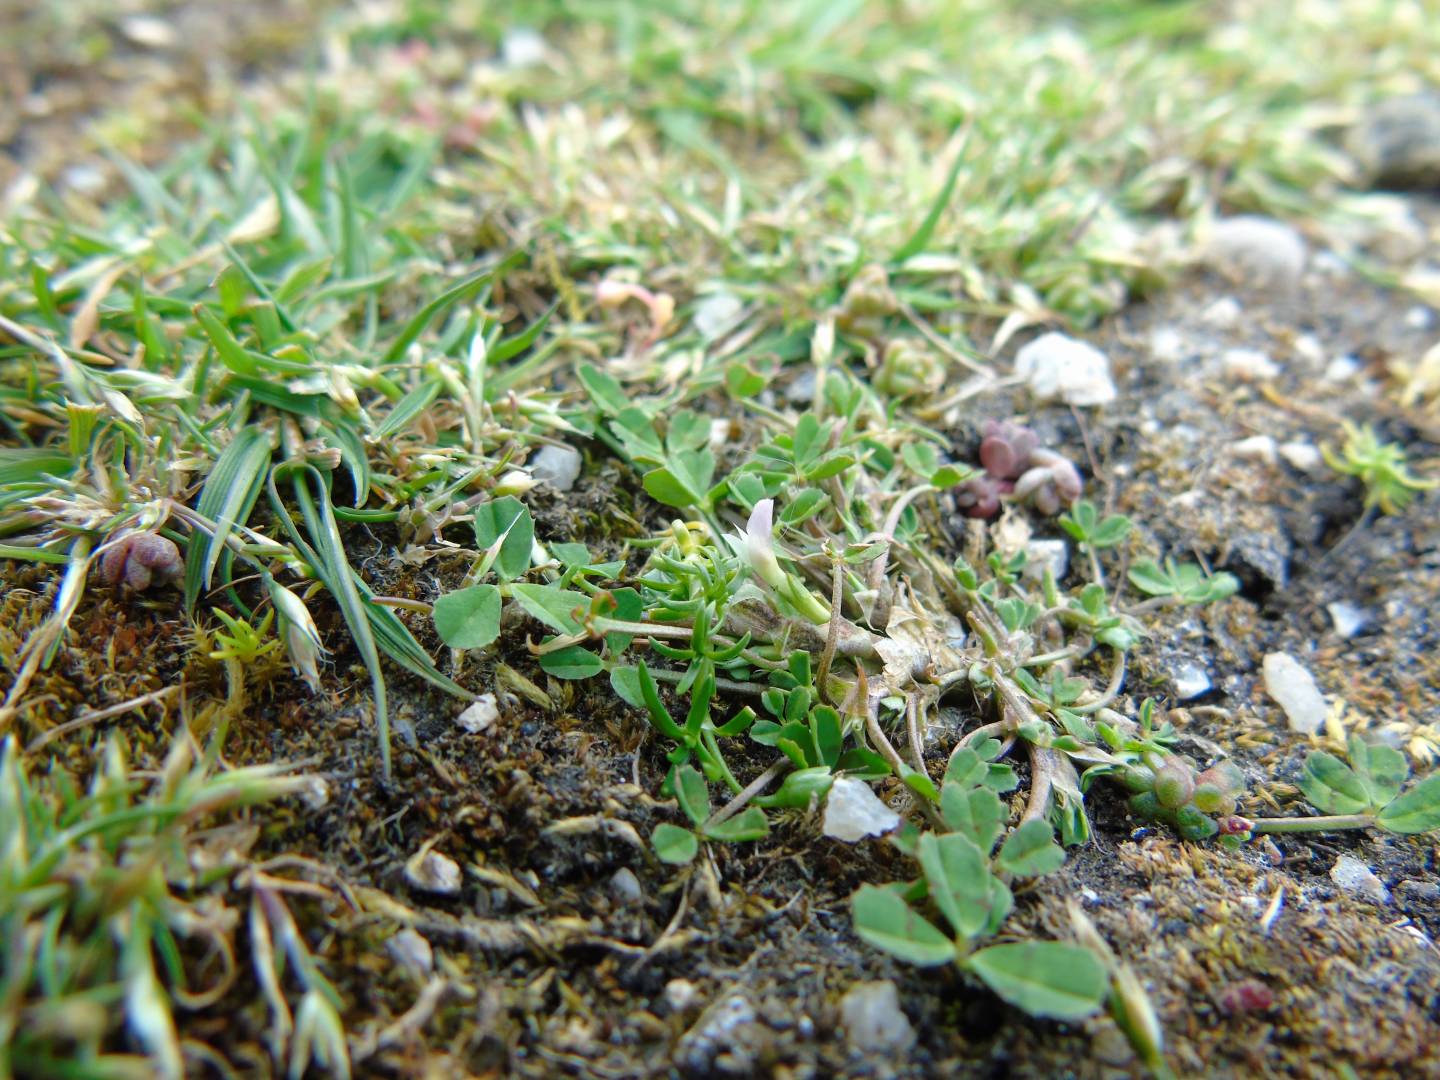 Dalkey Island rare plant survey - the miniscule Trifolium ornithopodioides